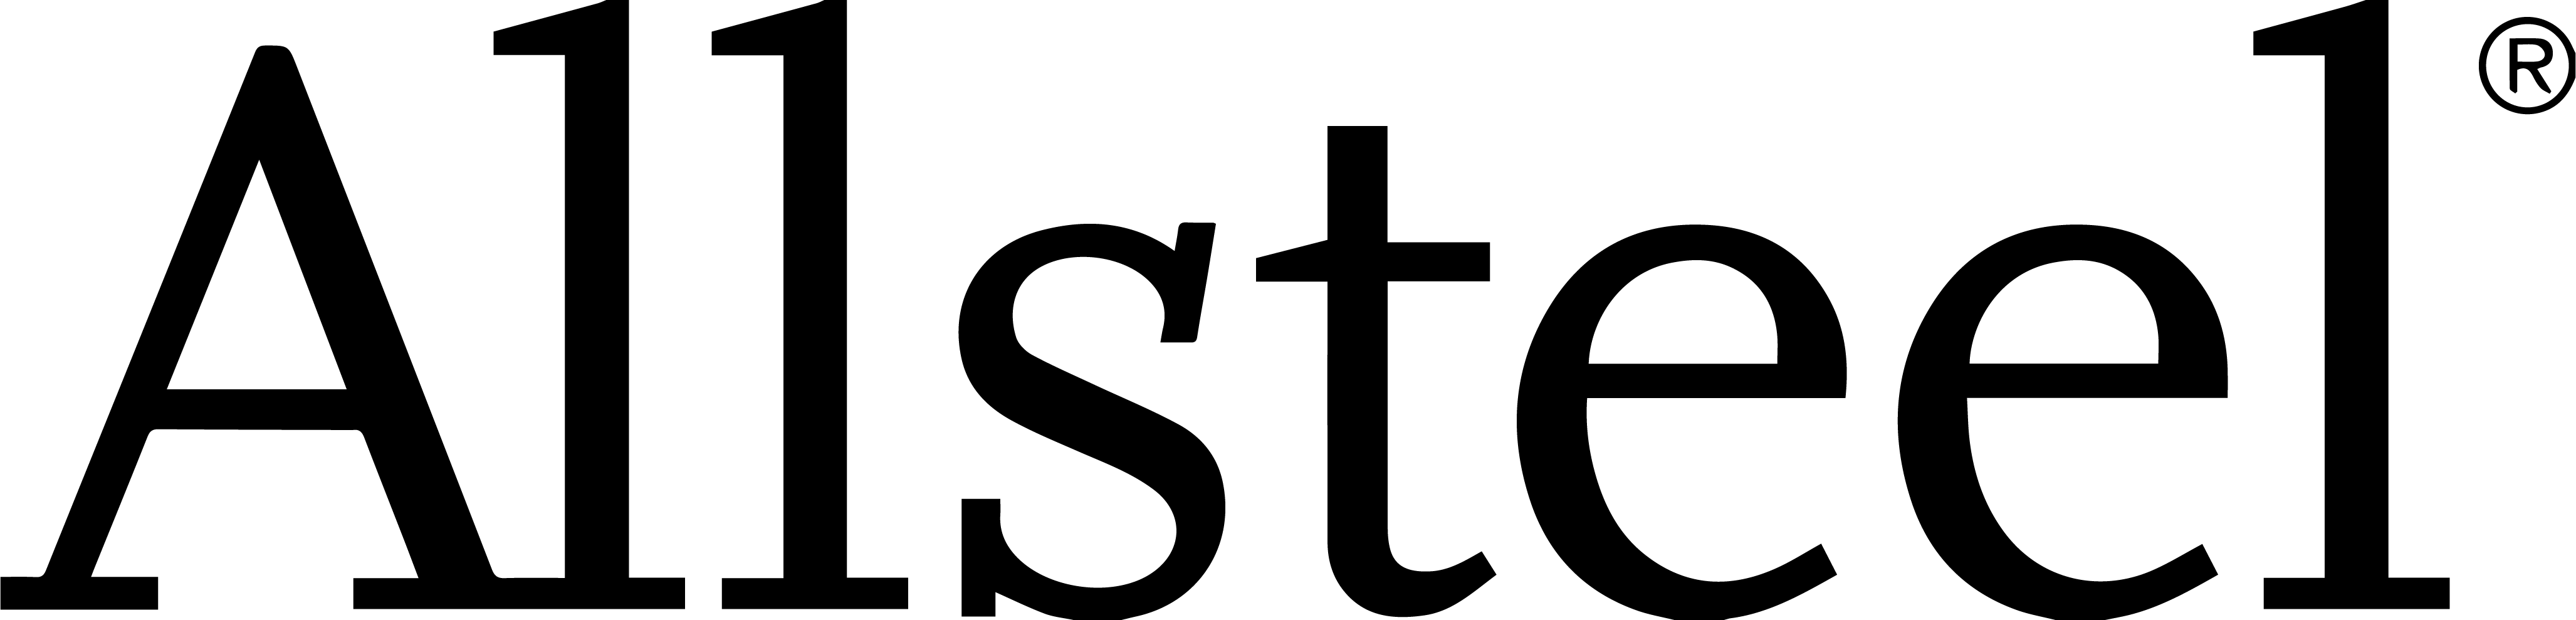 Allsteel, Inc. logo